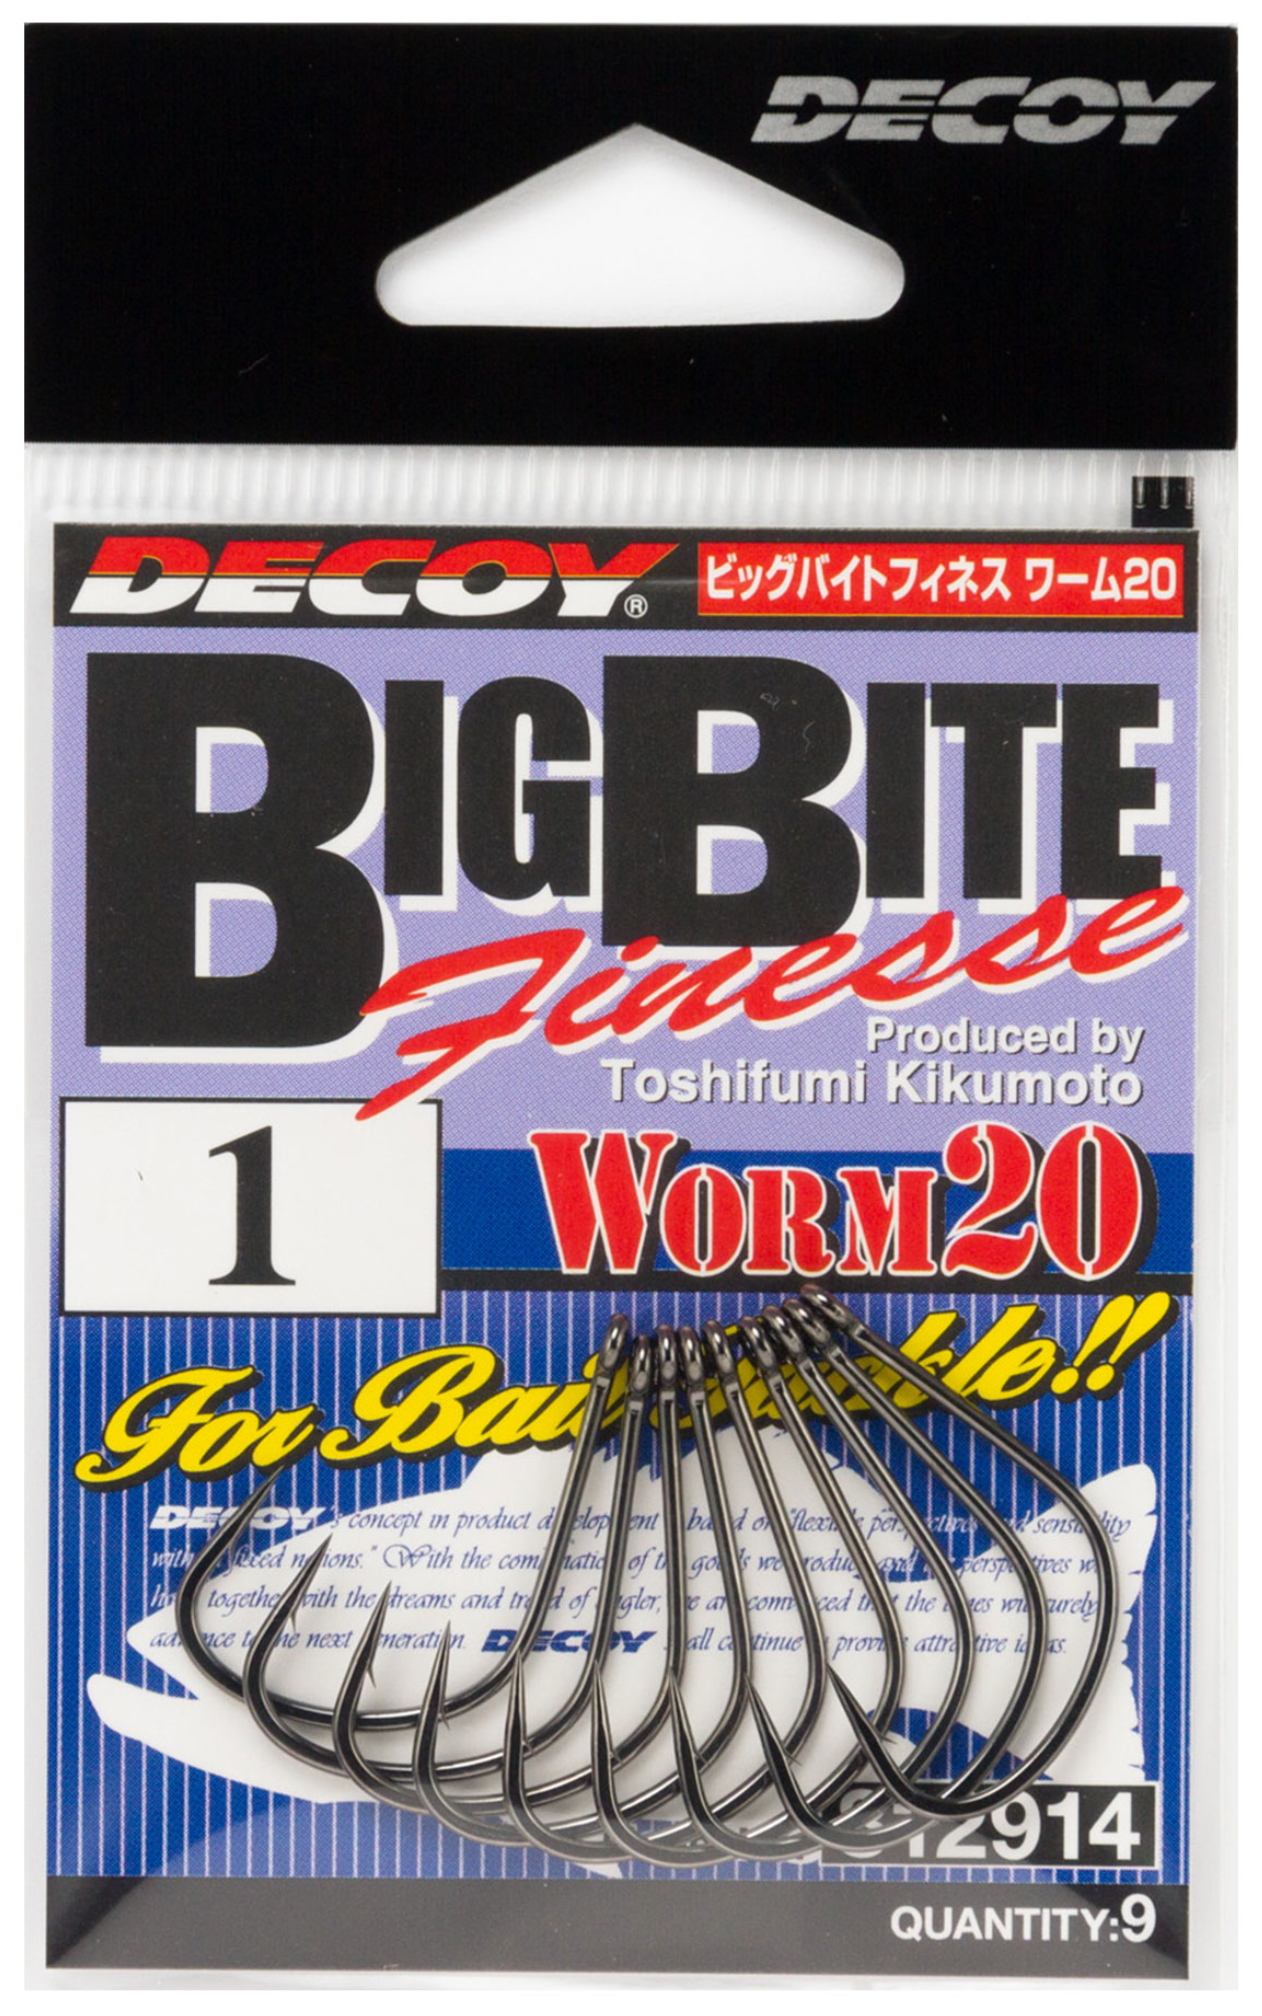 Decoy Worm 20 Big Bite Finesse